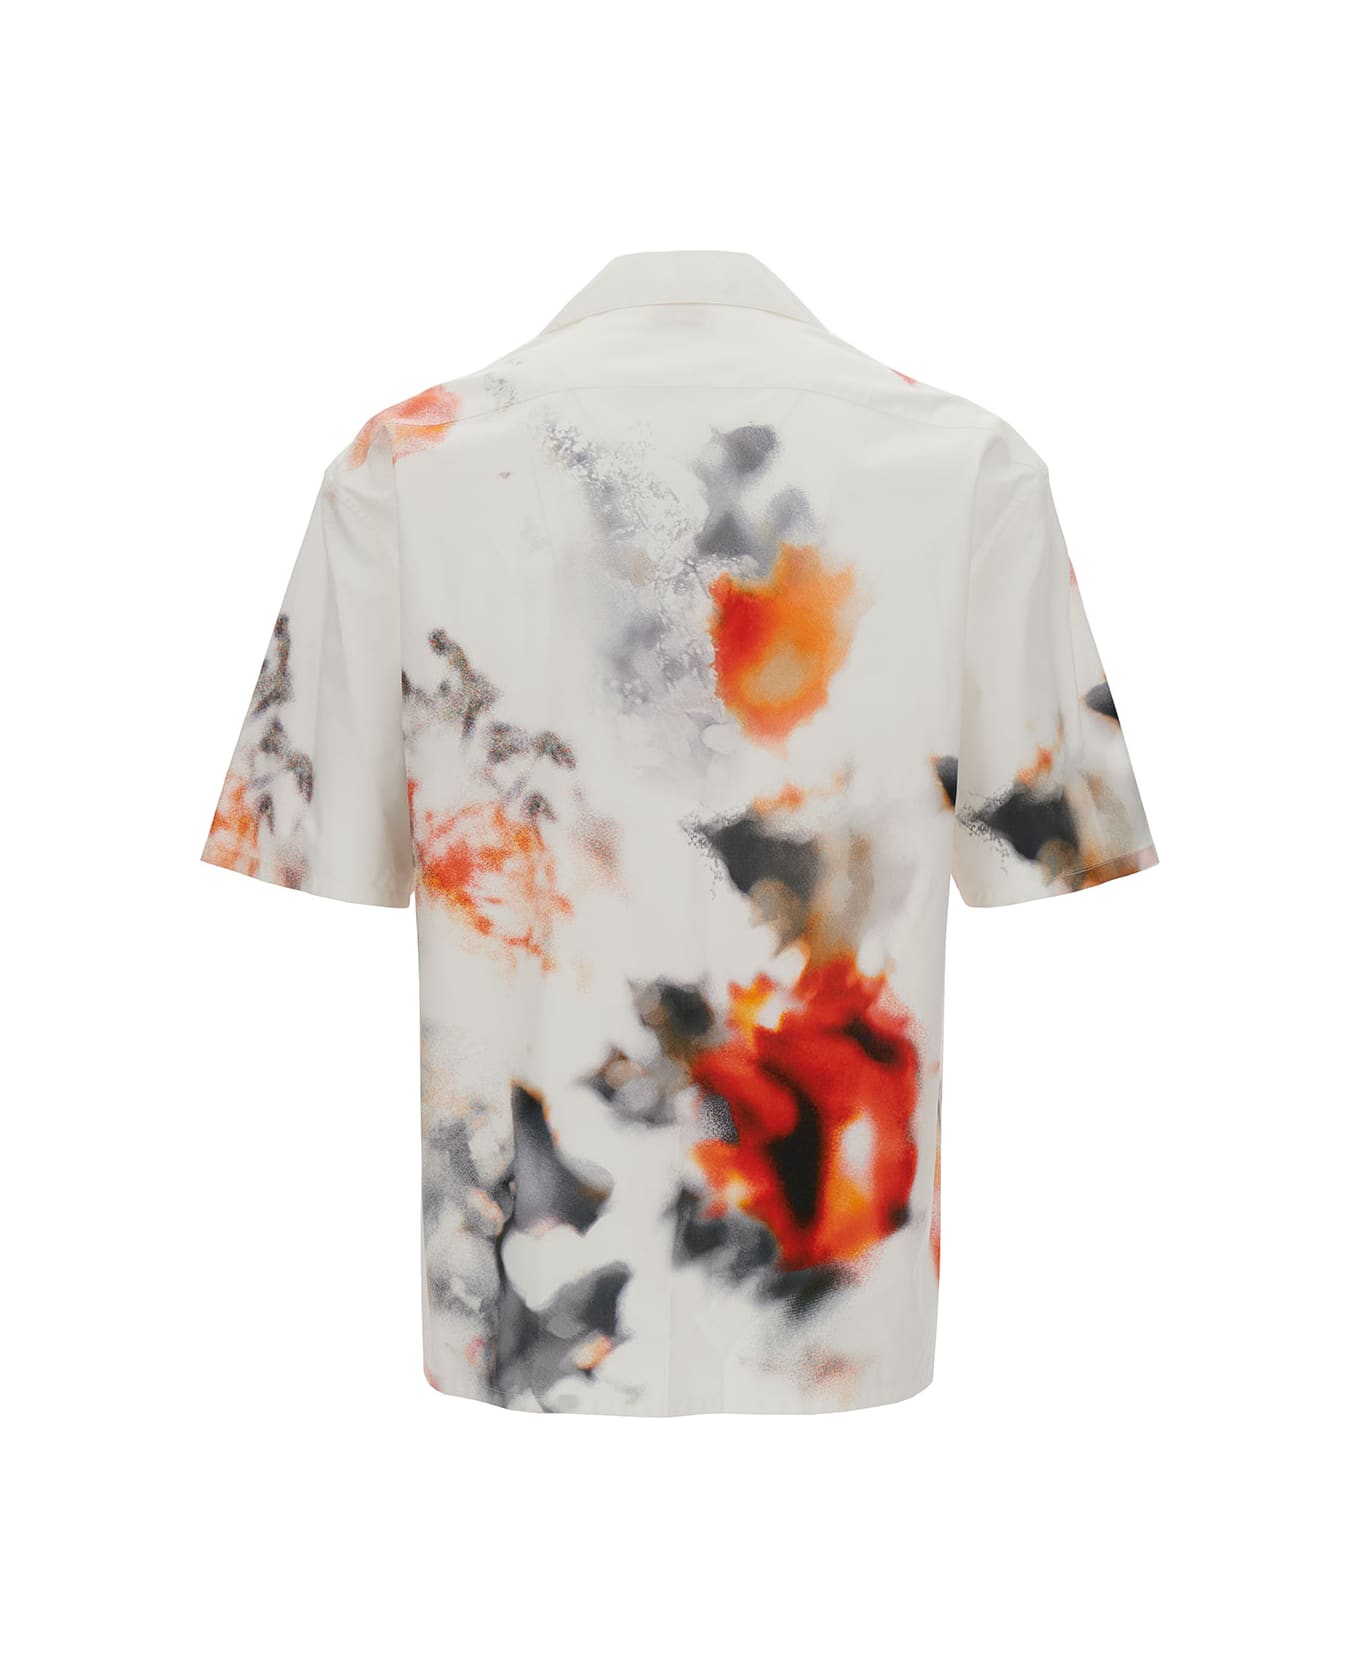 Alexander McQueen Bowling Shirt With Multicolor Print - Multicolor